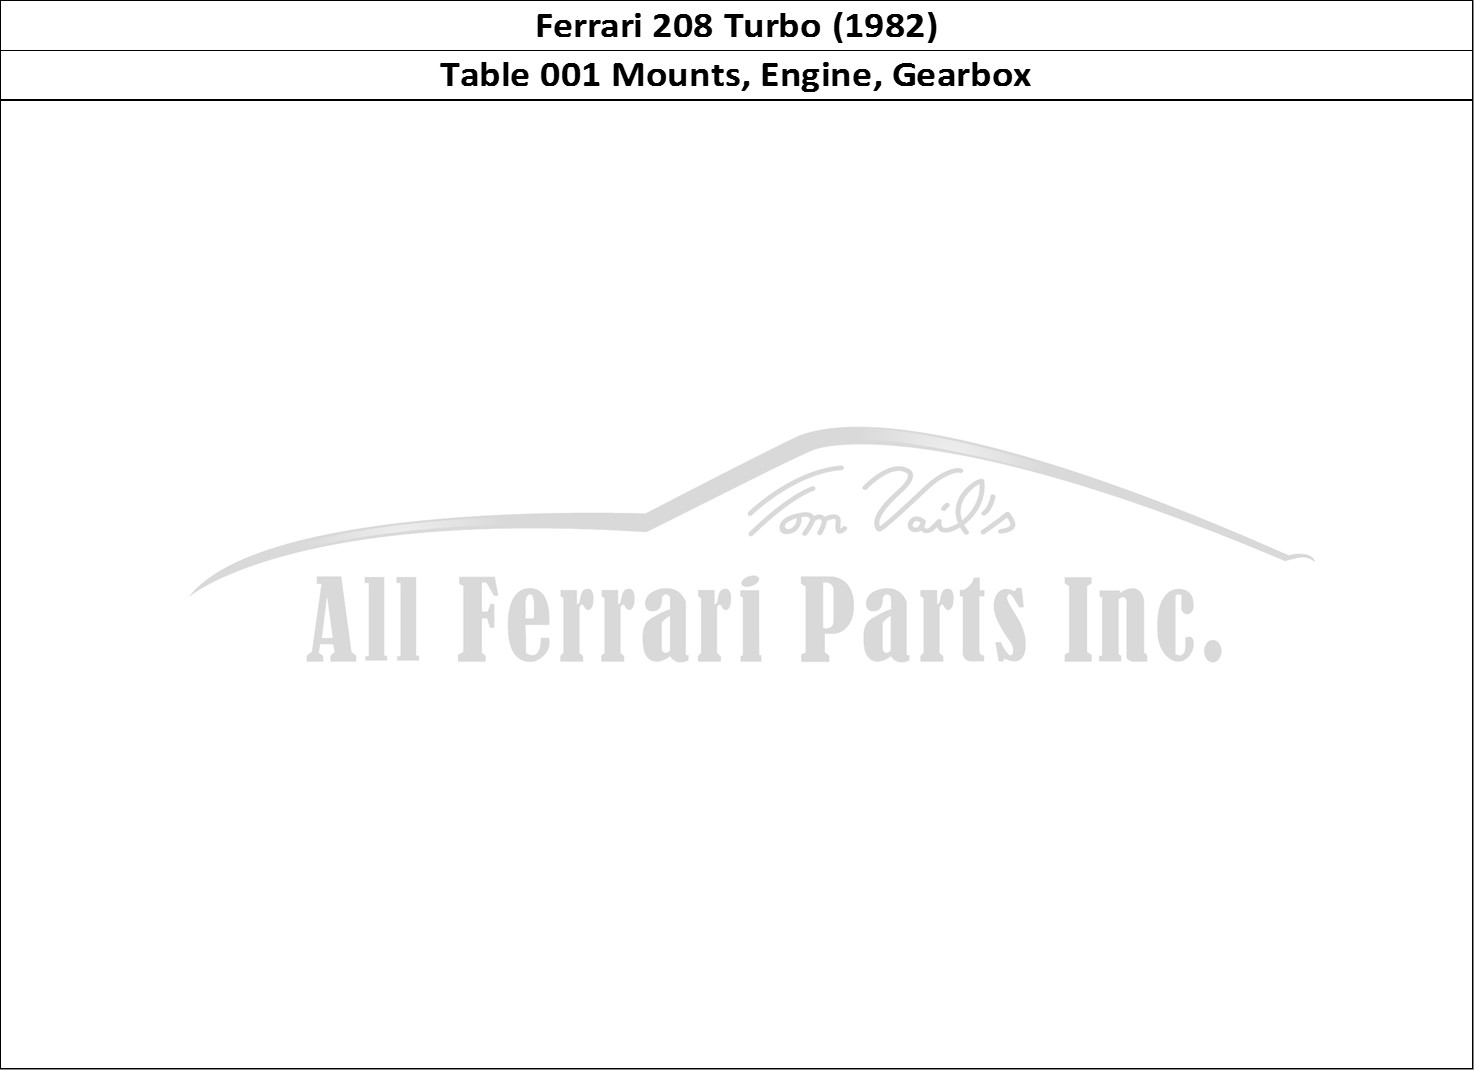 Ferrari Parts Ferrari 208 Turbo (1982) Page 001 Engine - Gearbox and Supp